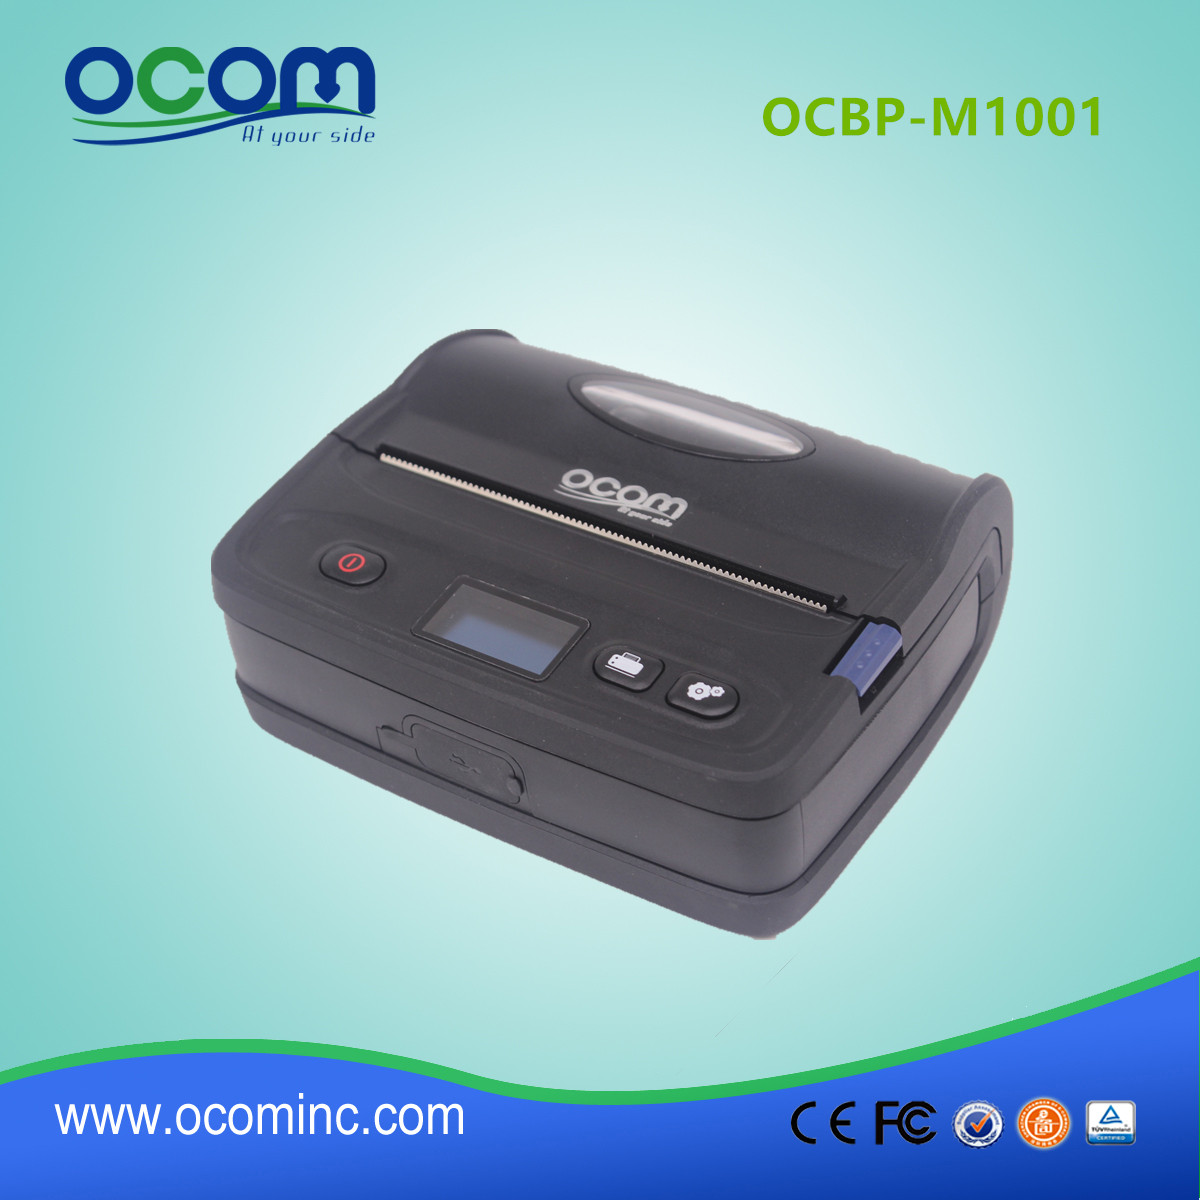 OCBP-M1001 handige draagbare bluetooth thermische labelprinter